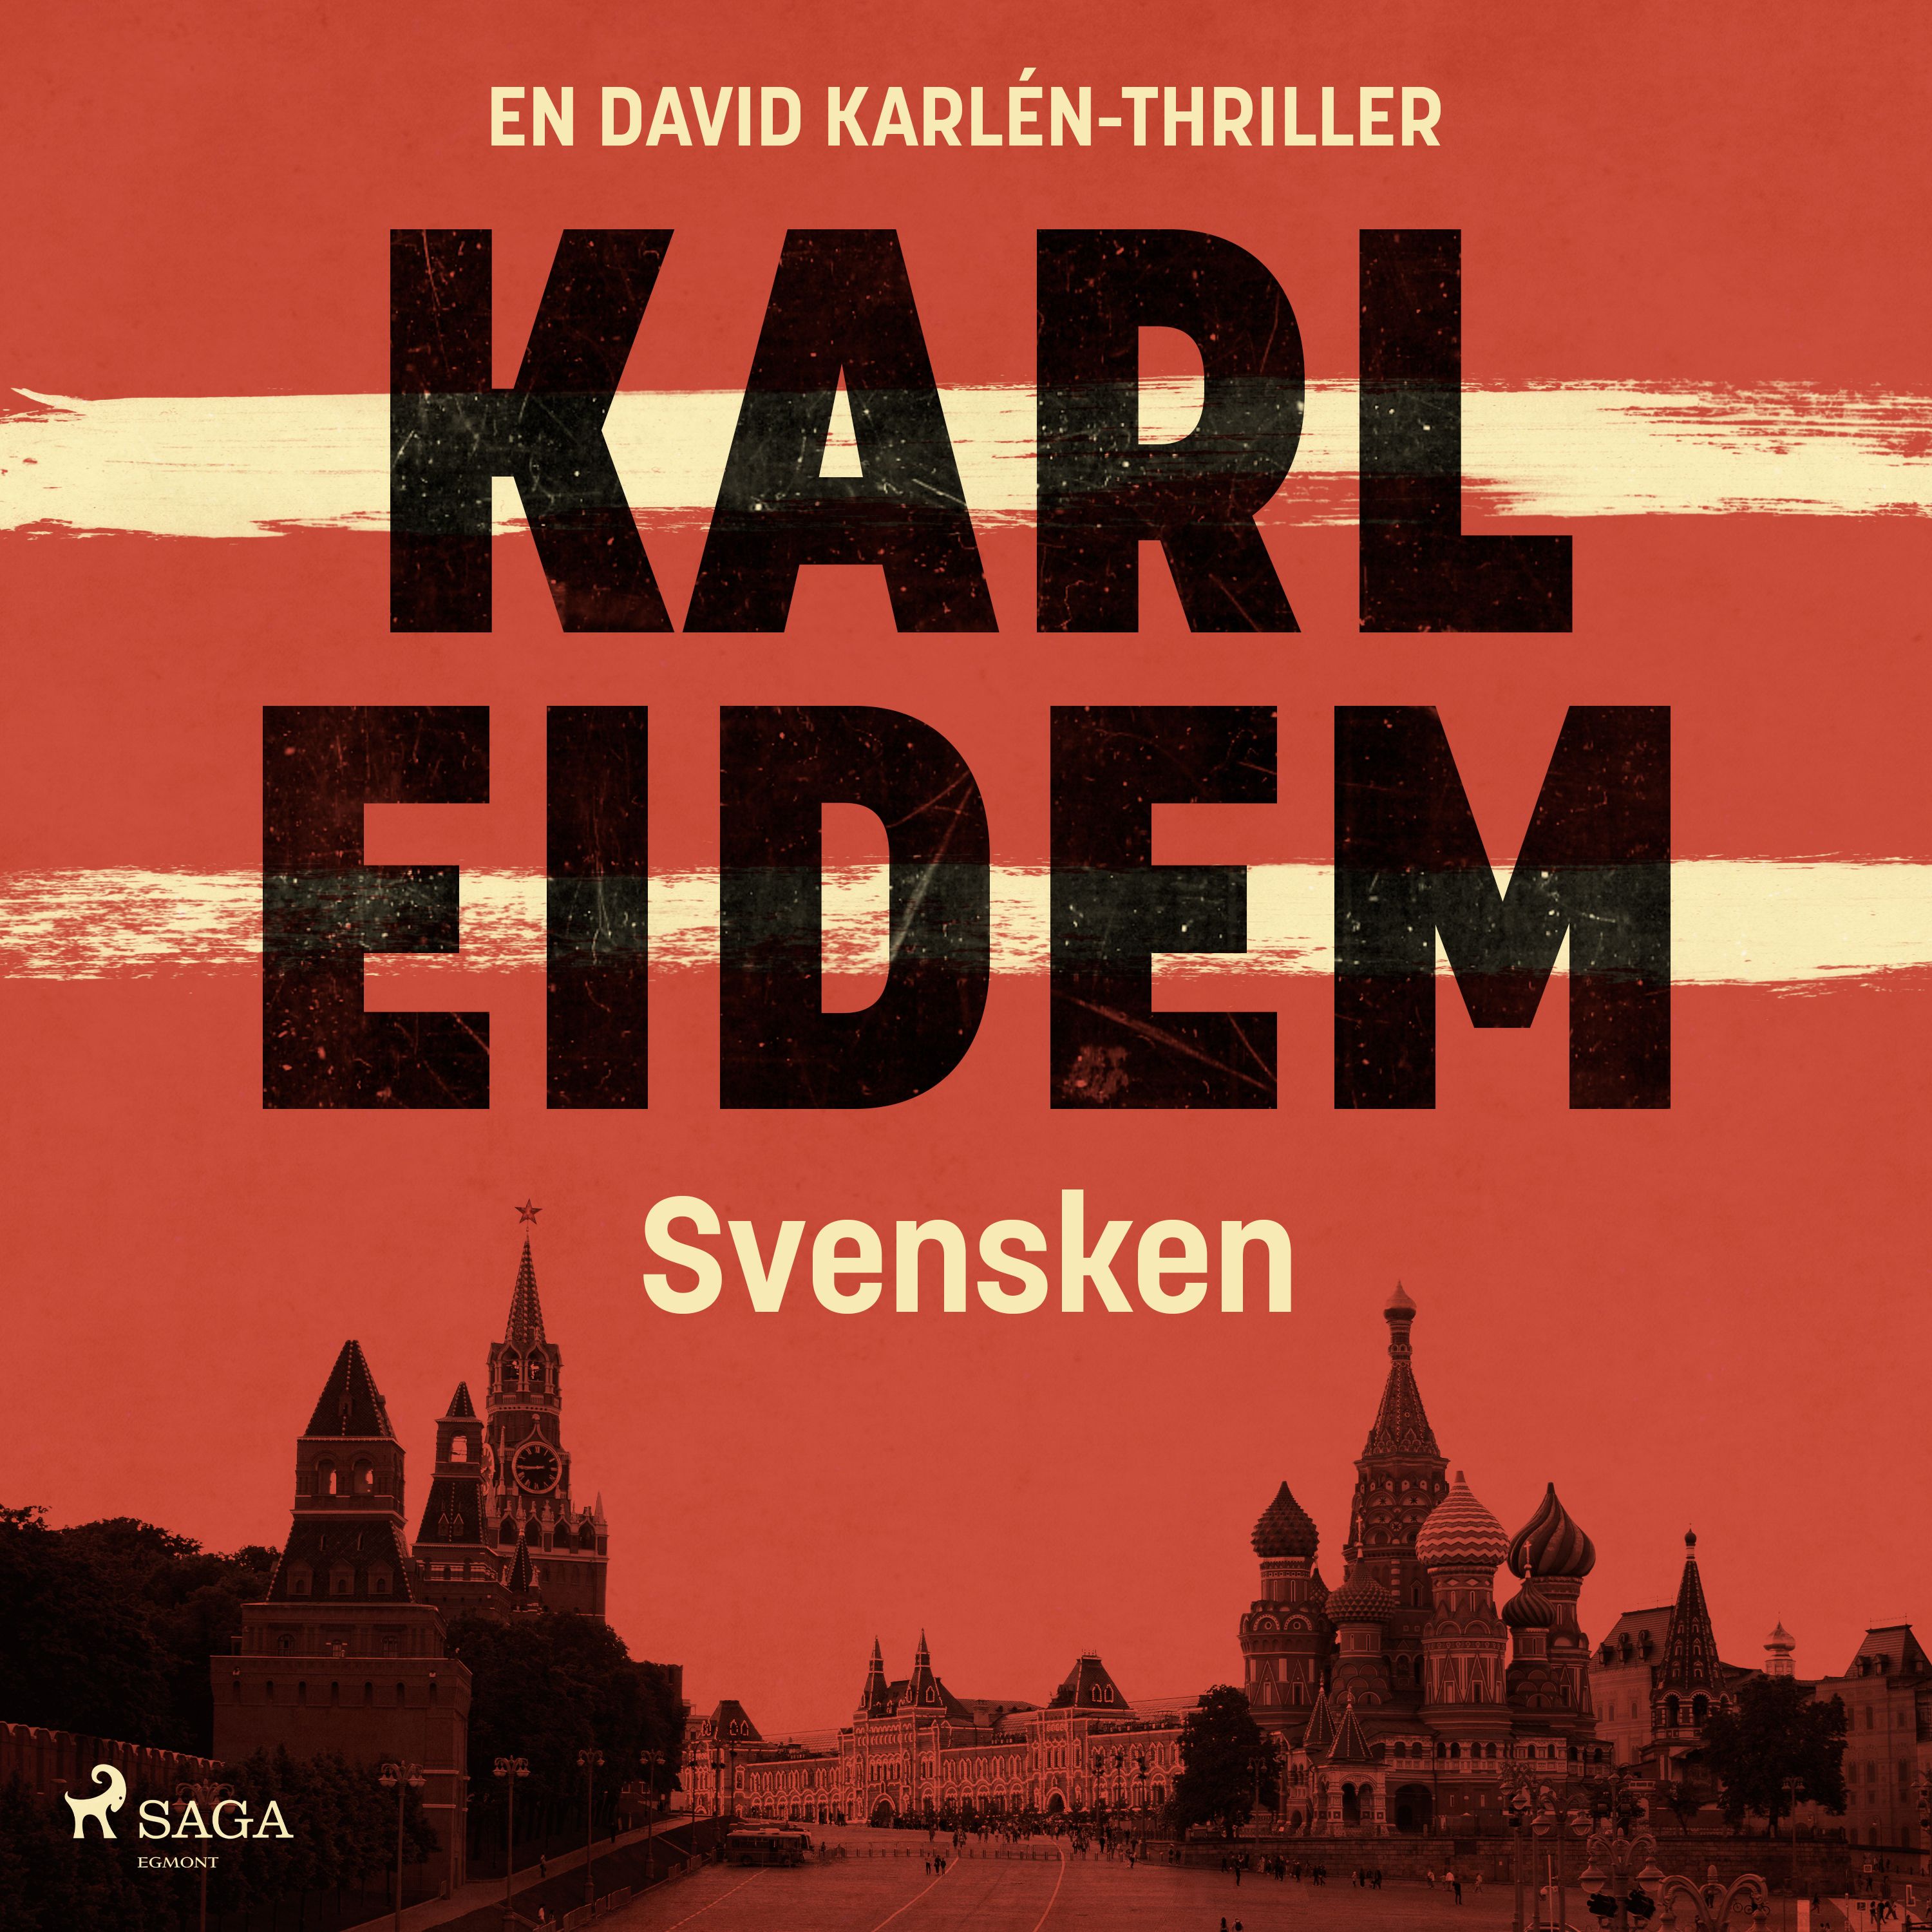 Svensken, audiobook by Karl Eidem